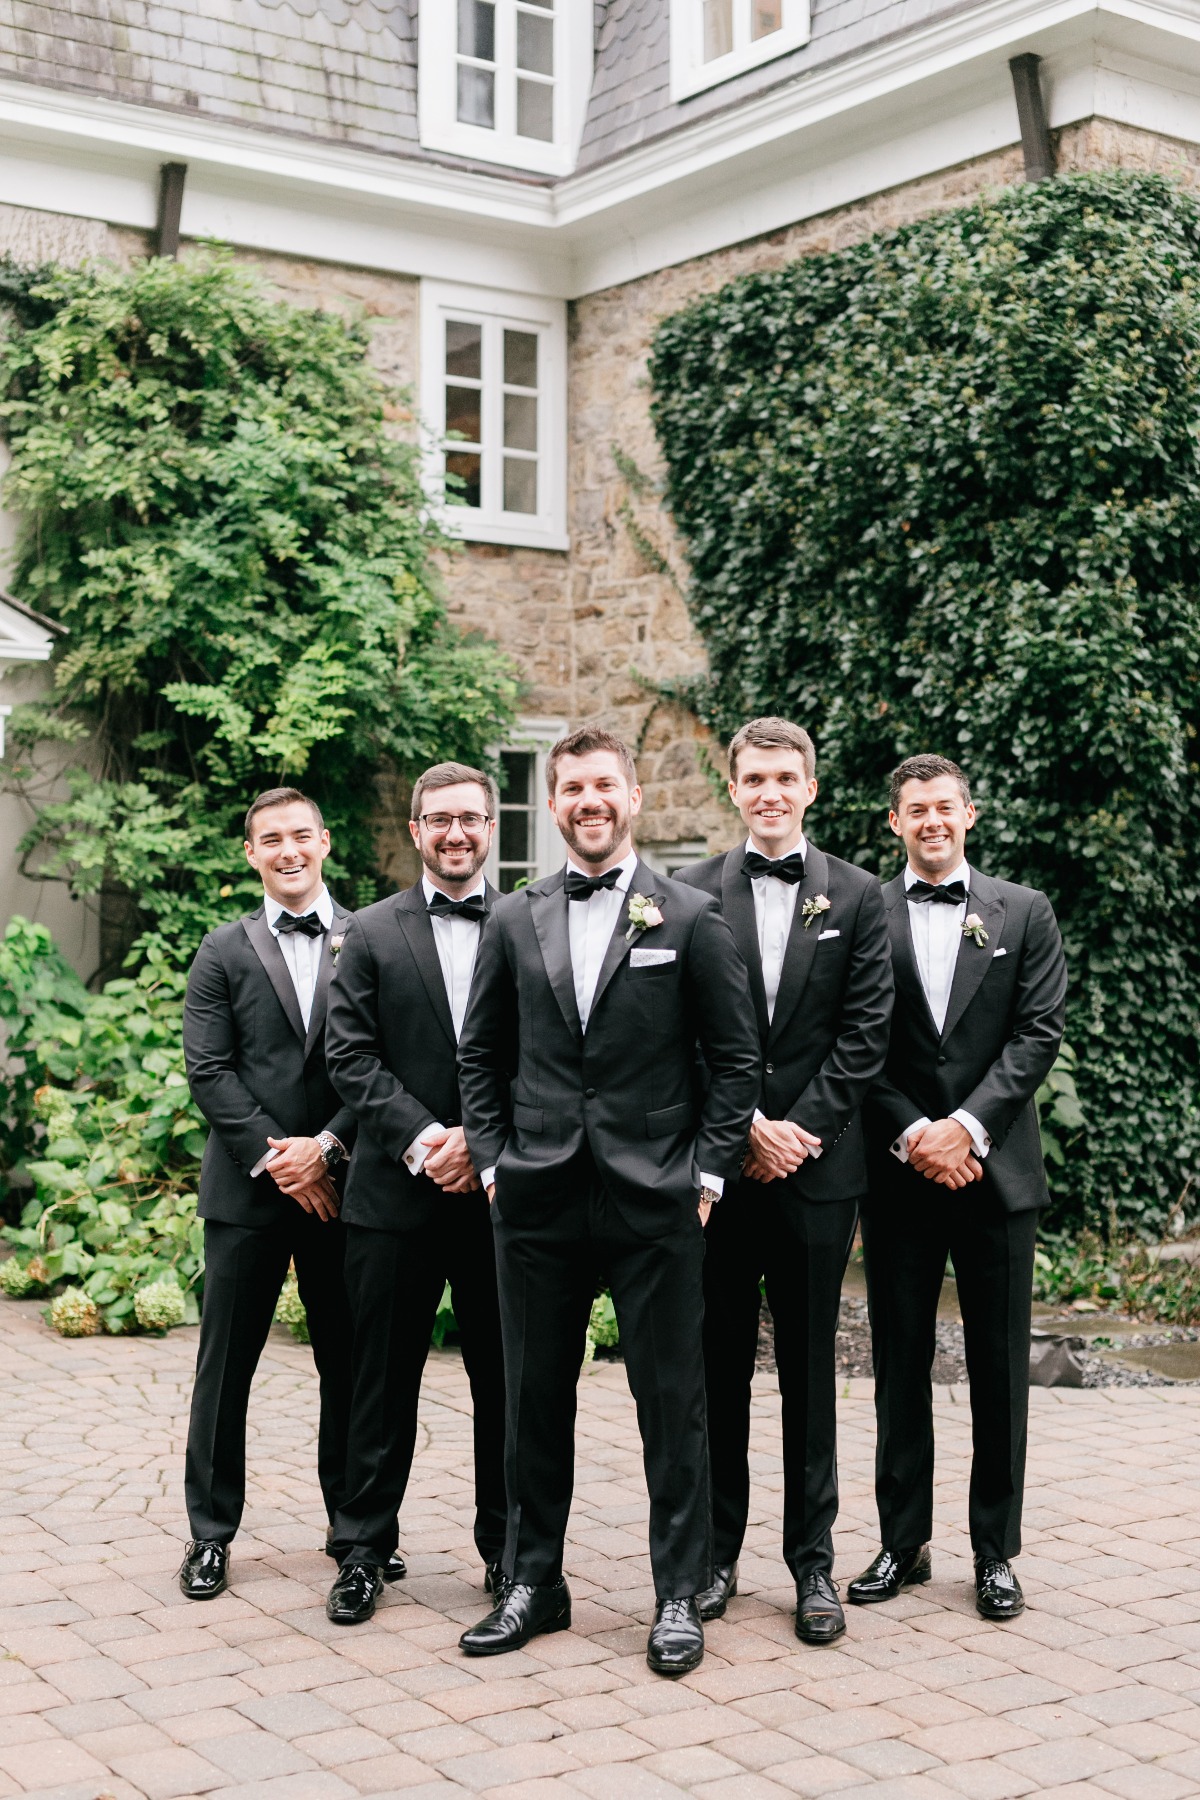 Classic black tie look for the groomsmen